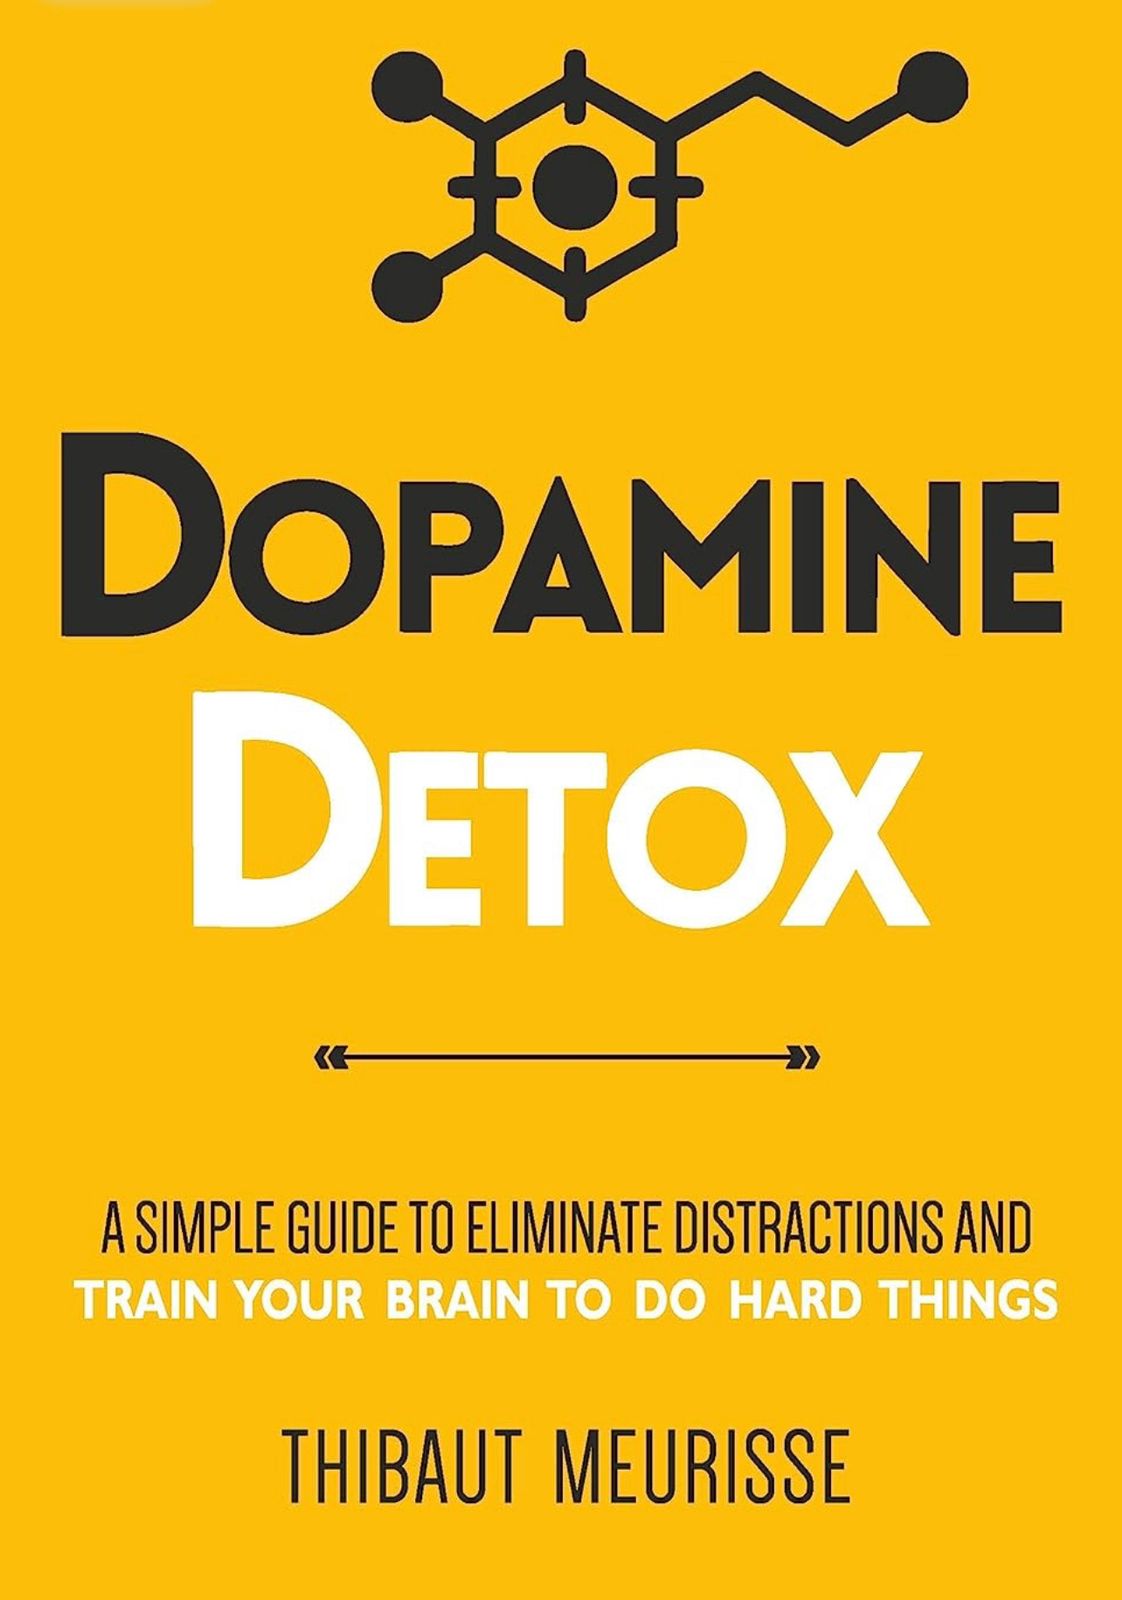 New Arrival: Dopamine detox